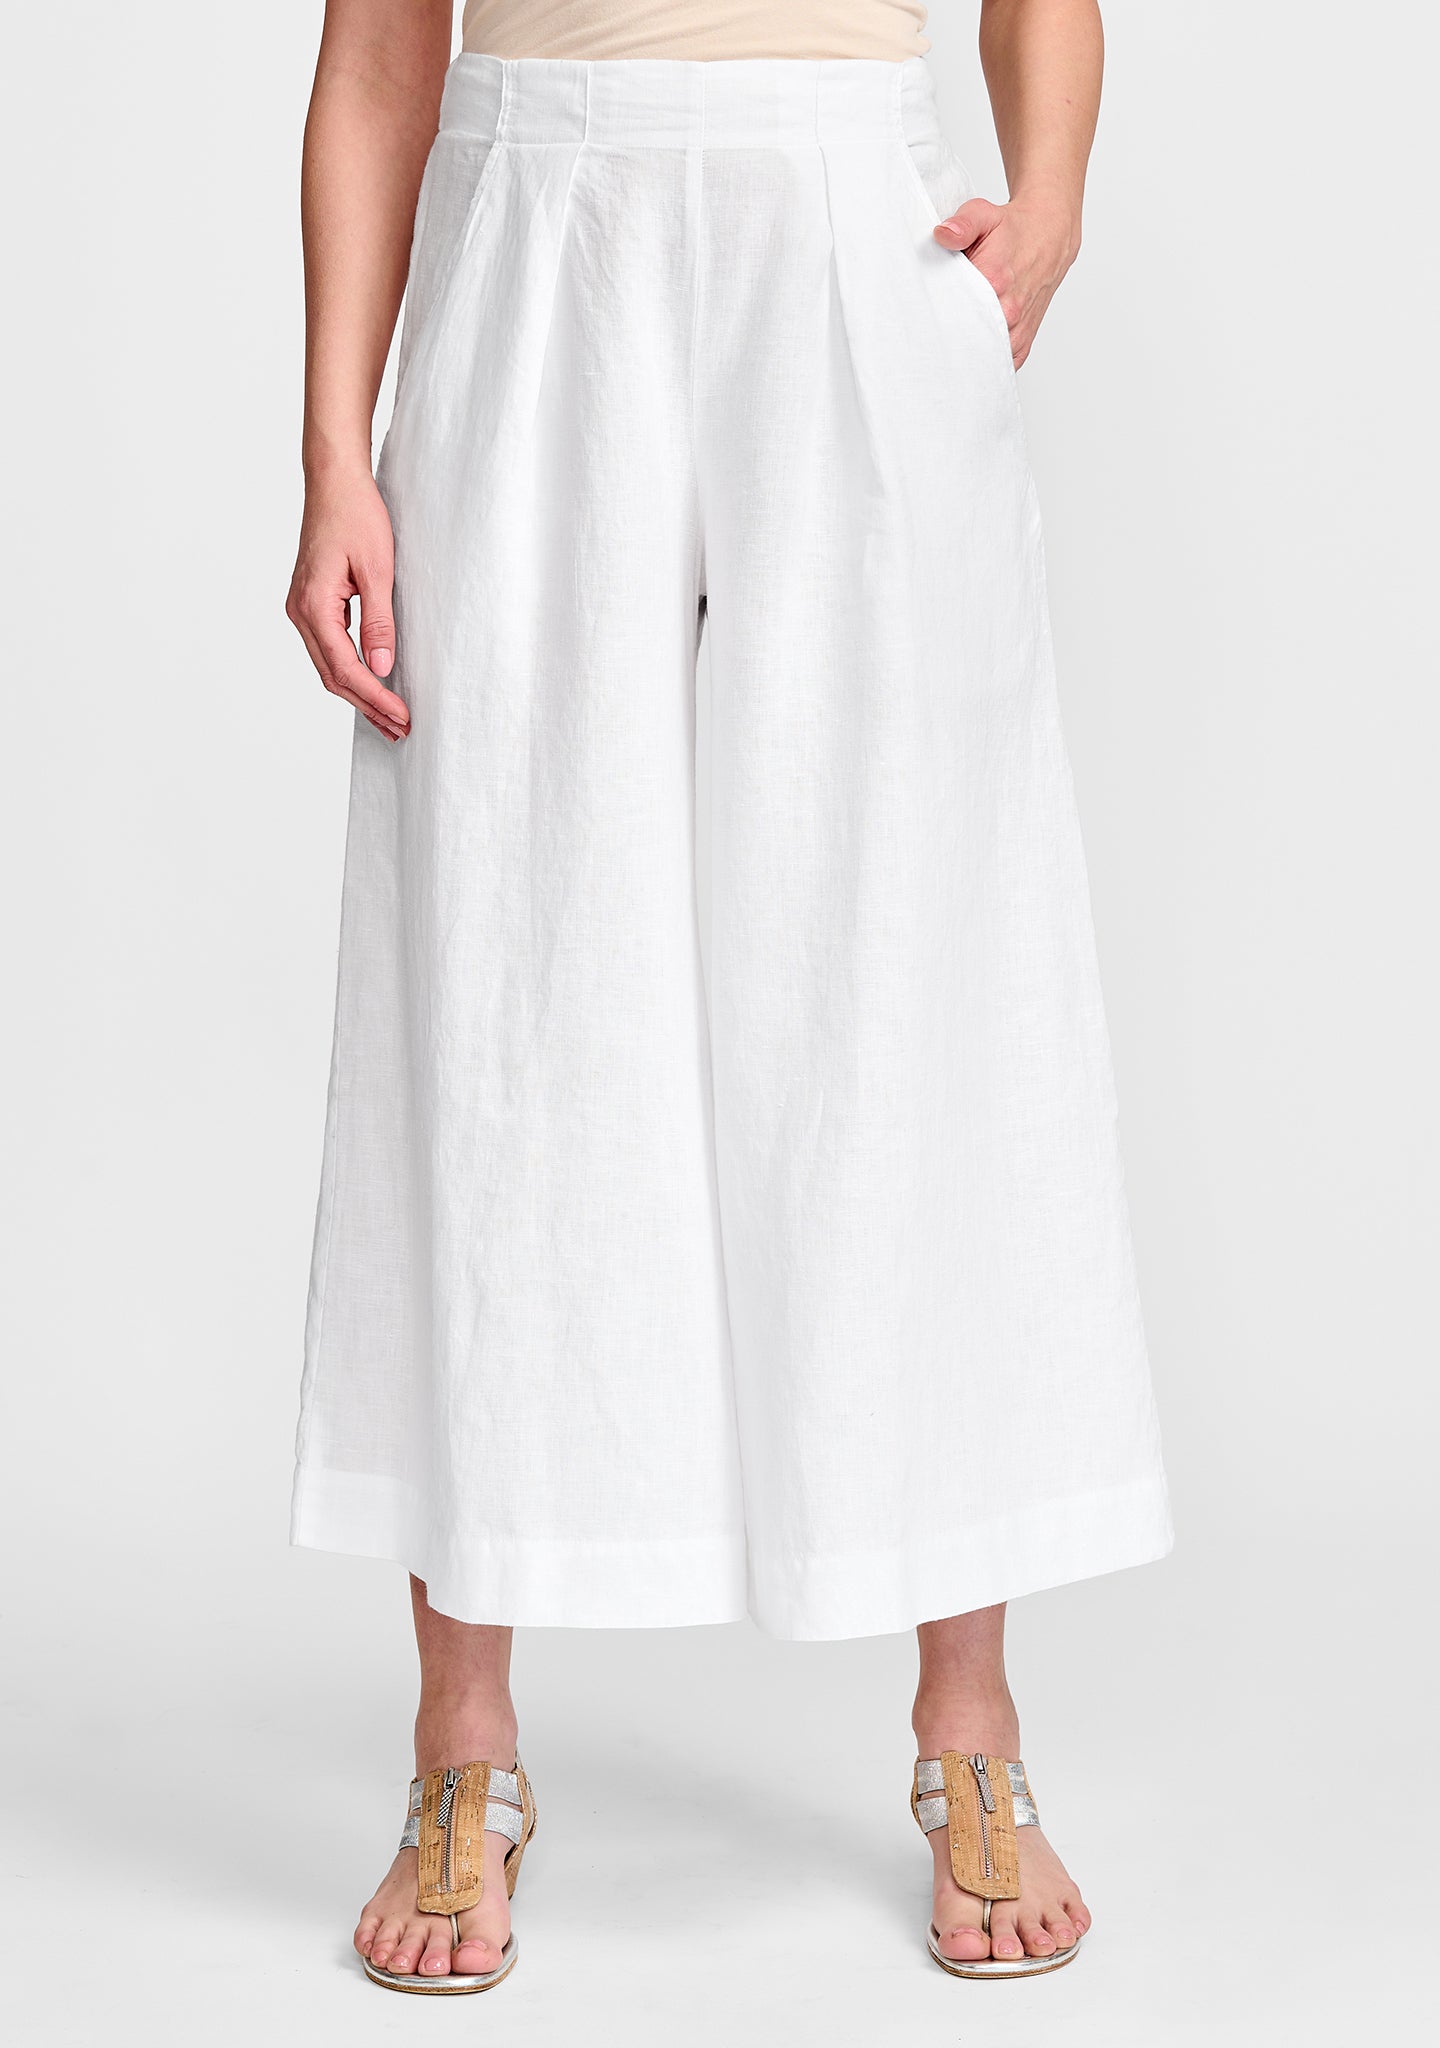 Linen Pants for Women, Wide Leg Pants Linen, Linen Palazzo Pants Women,  Linen Trousers Women With Elastic Waist -  Norway